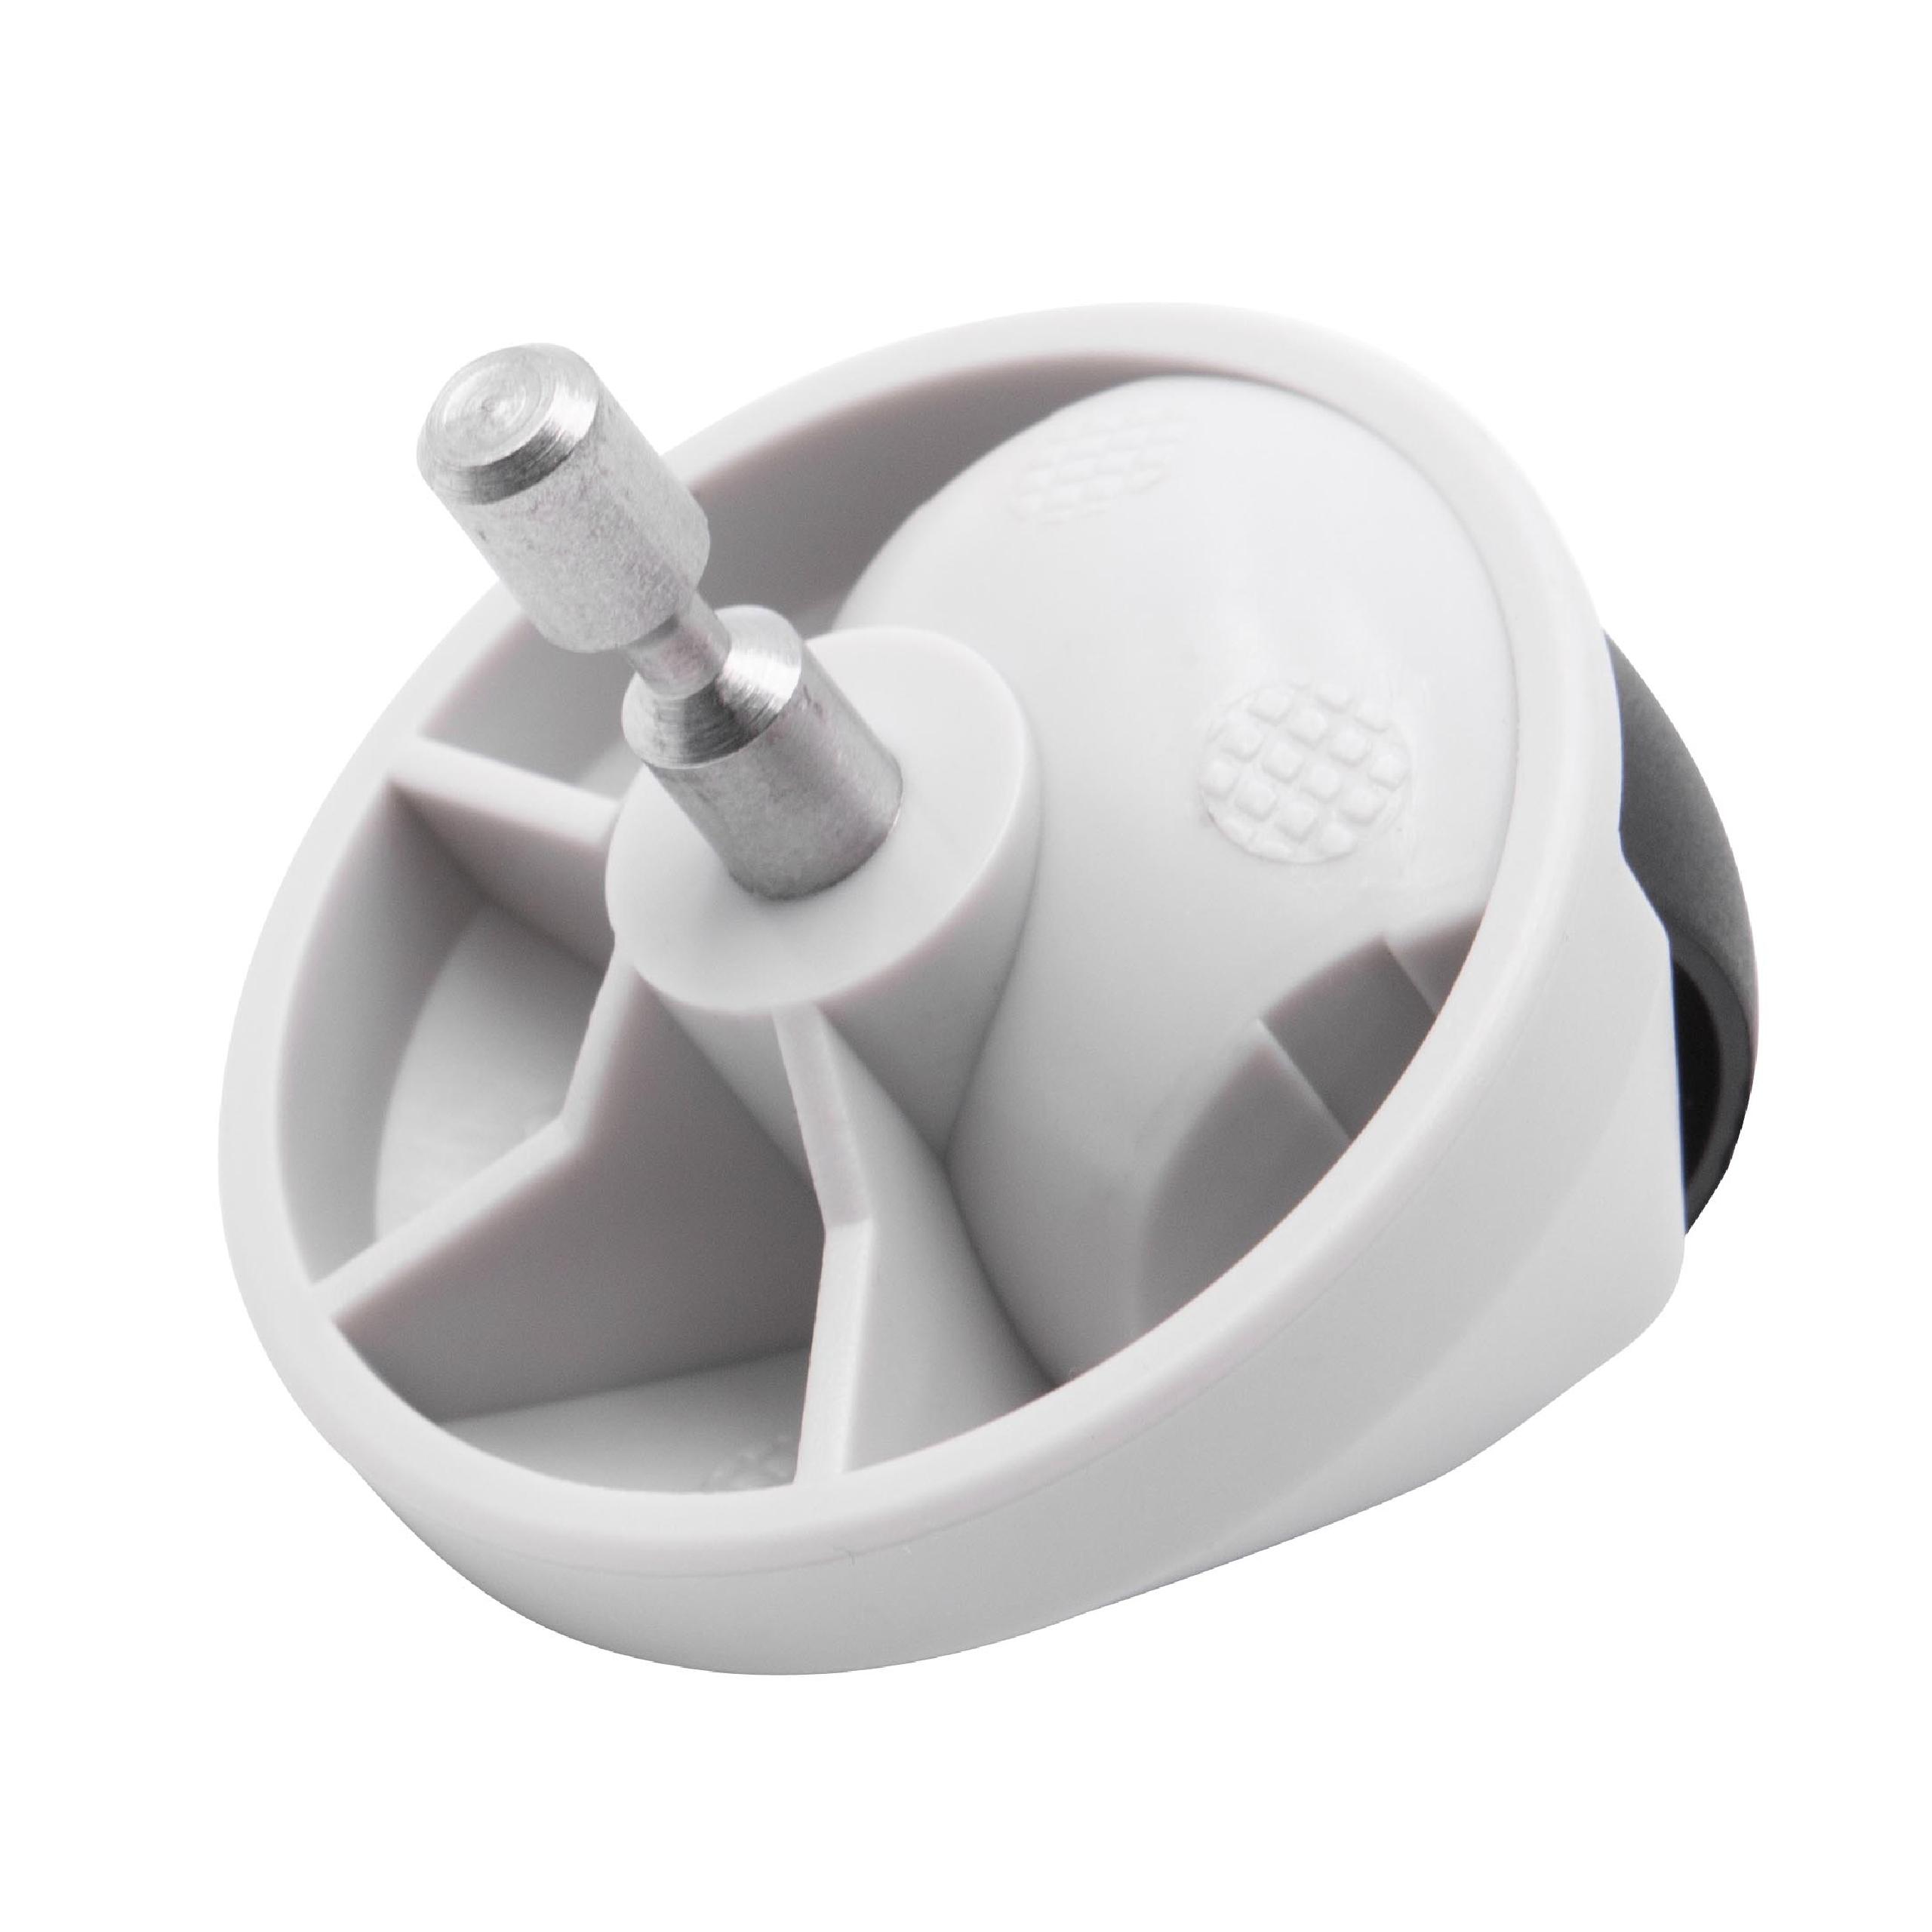 Replacement Wheel suitable for Xiaomi Mi / Xiaomi S50 vacuum cleaner robot etc